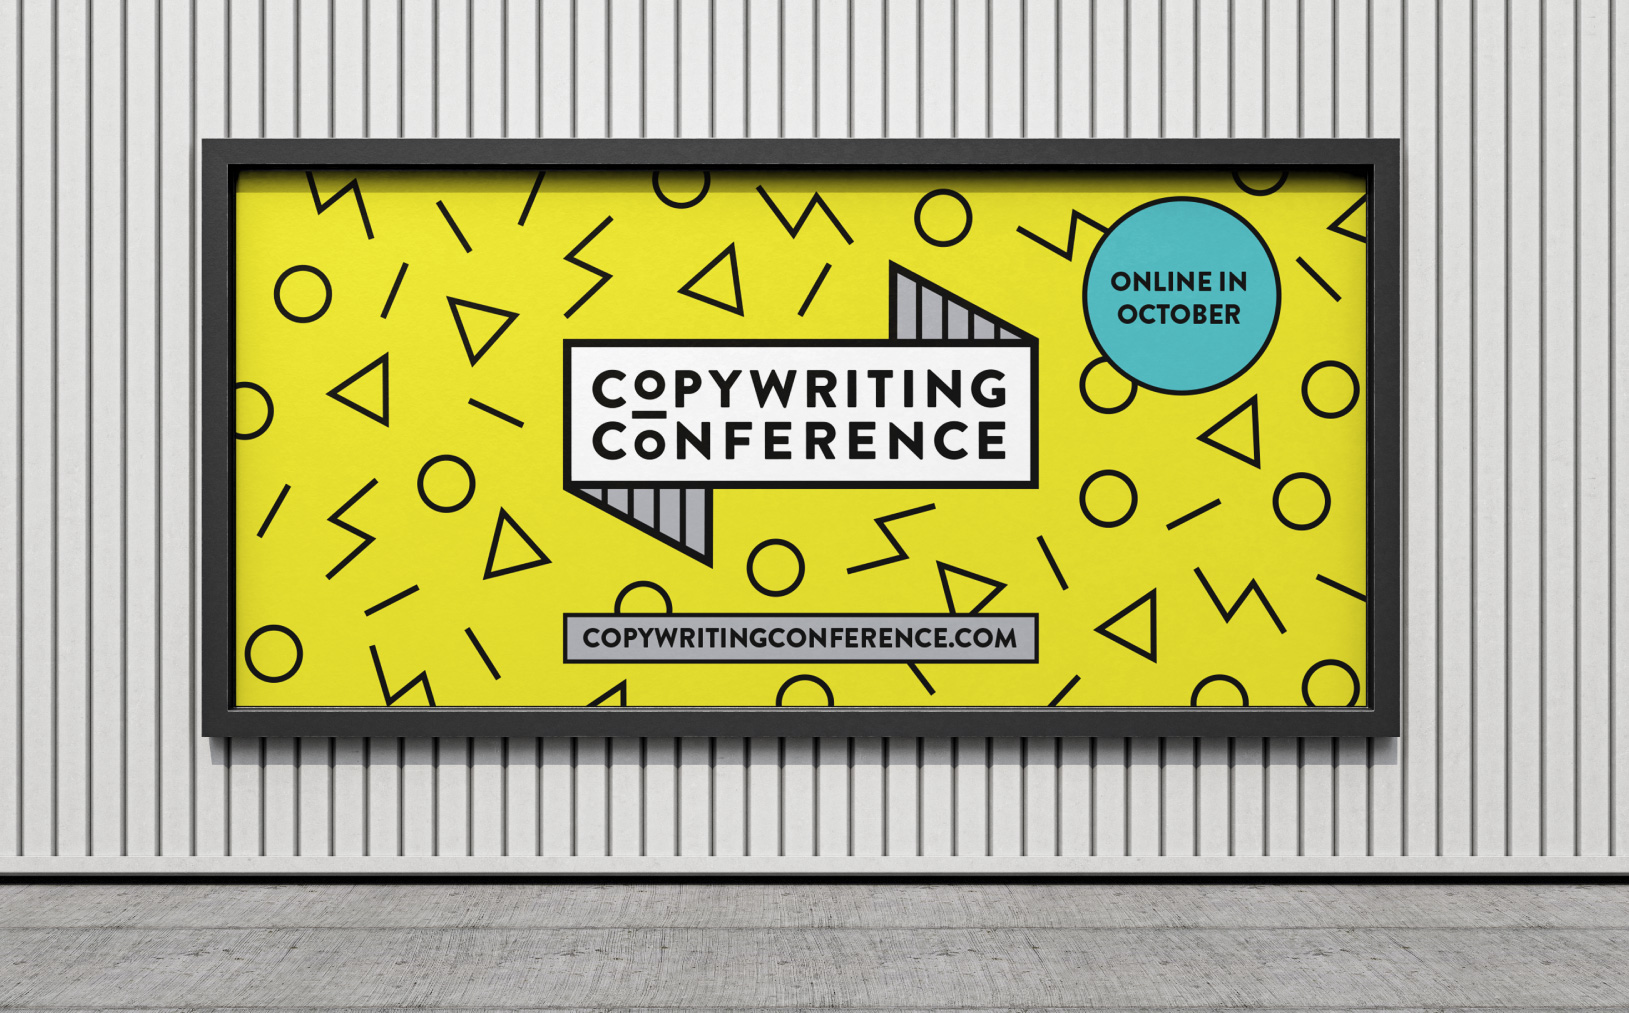 Copywriting Conference advert